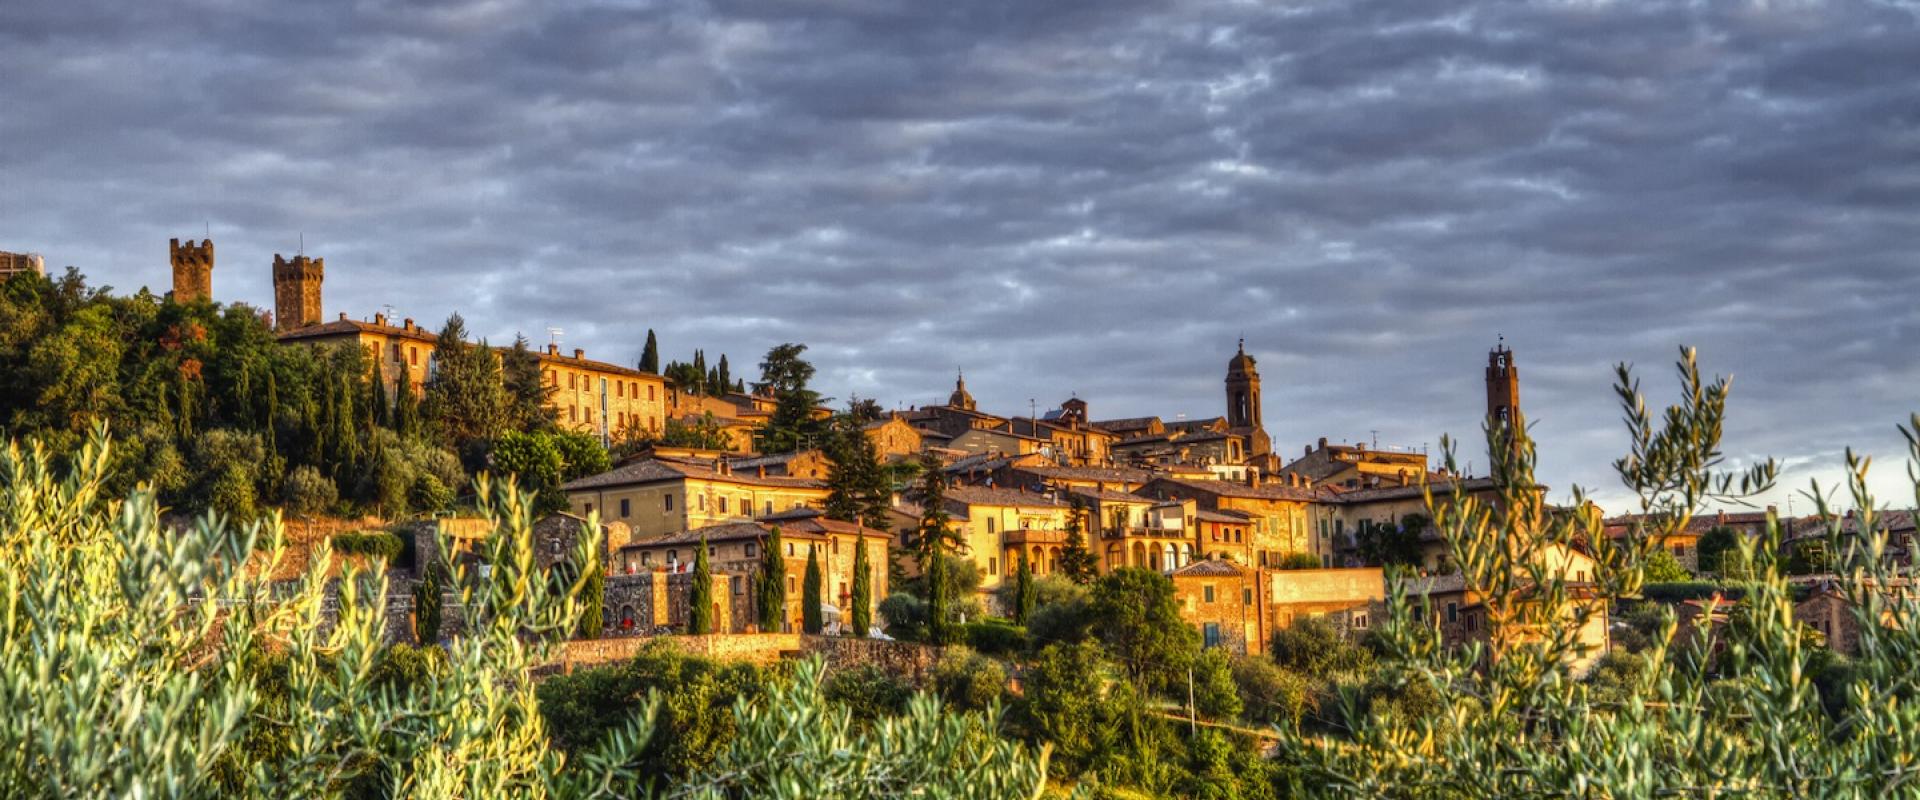 Visit of Montalcino Tuscany, Brunello's wine town!